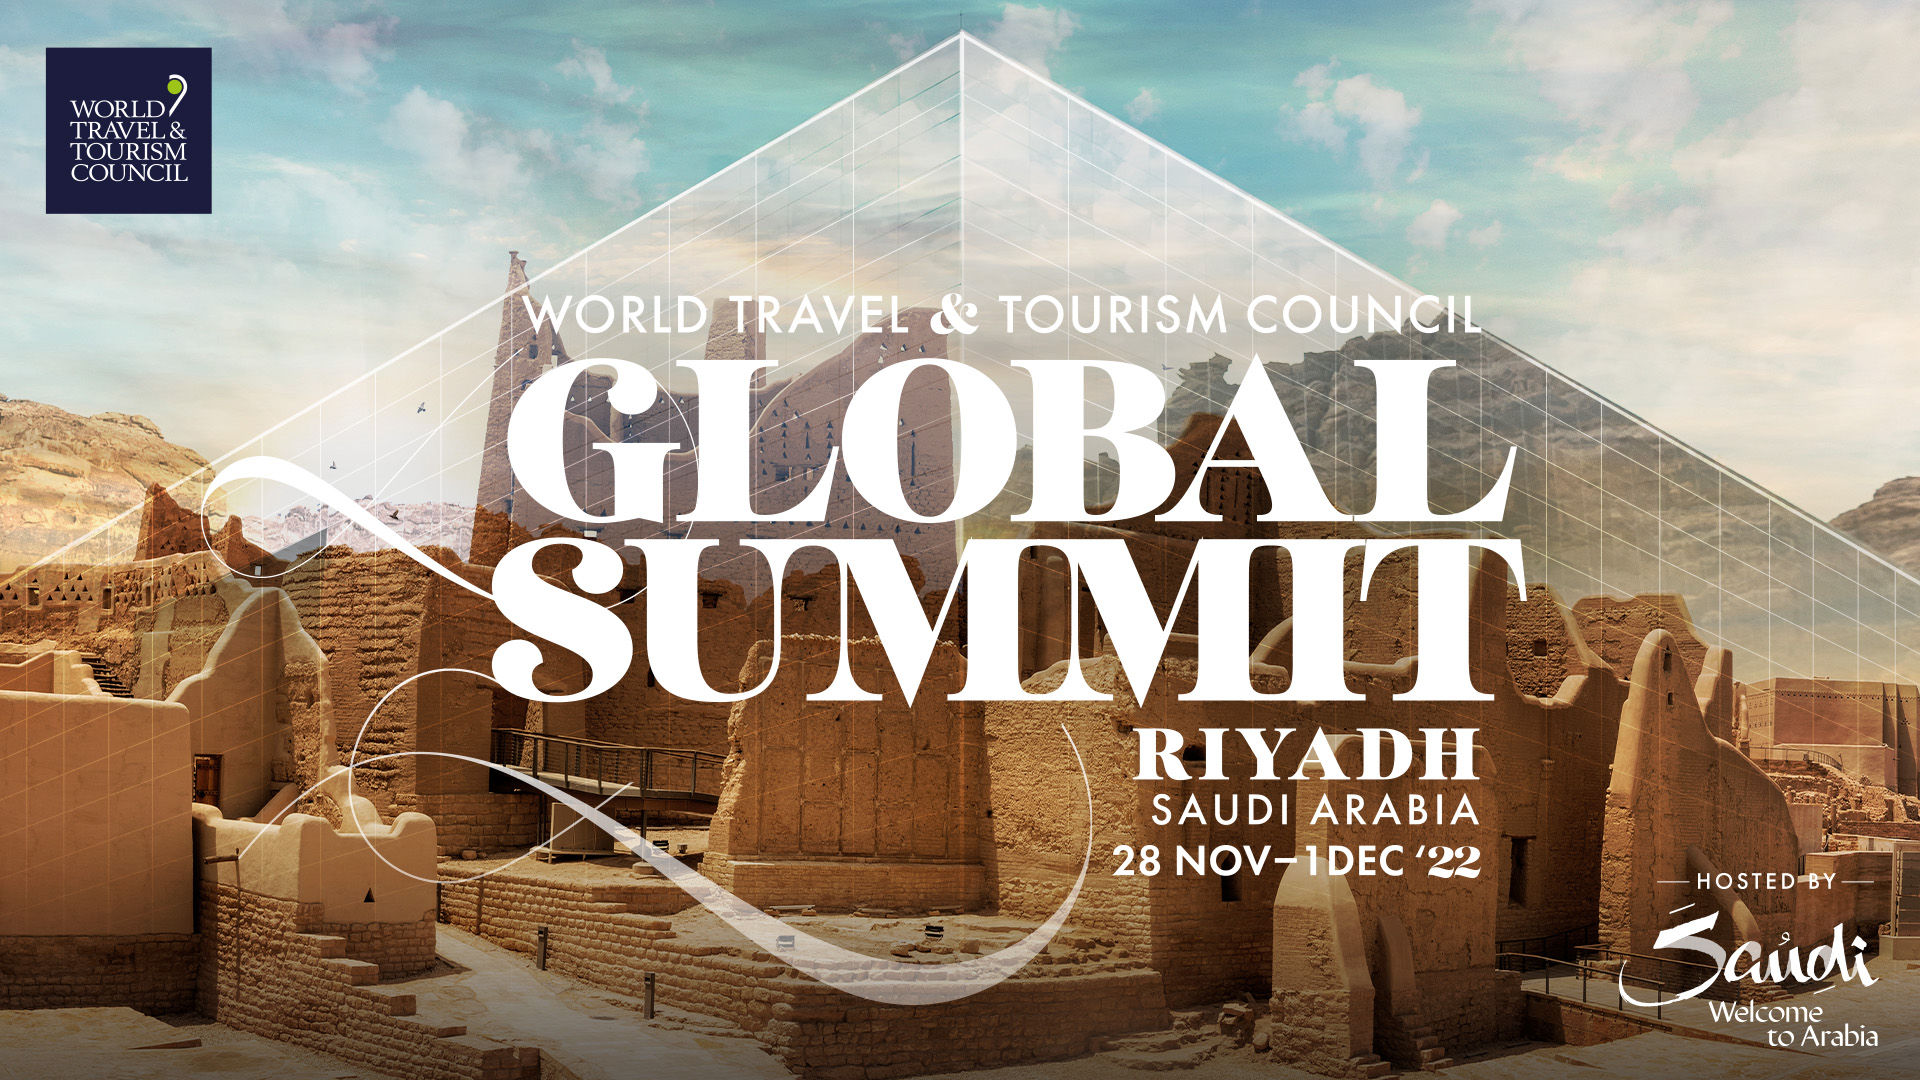 global tourism summit